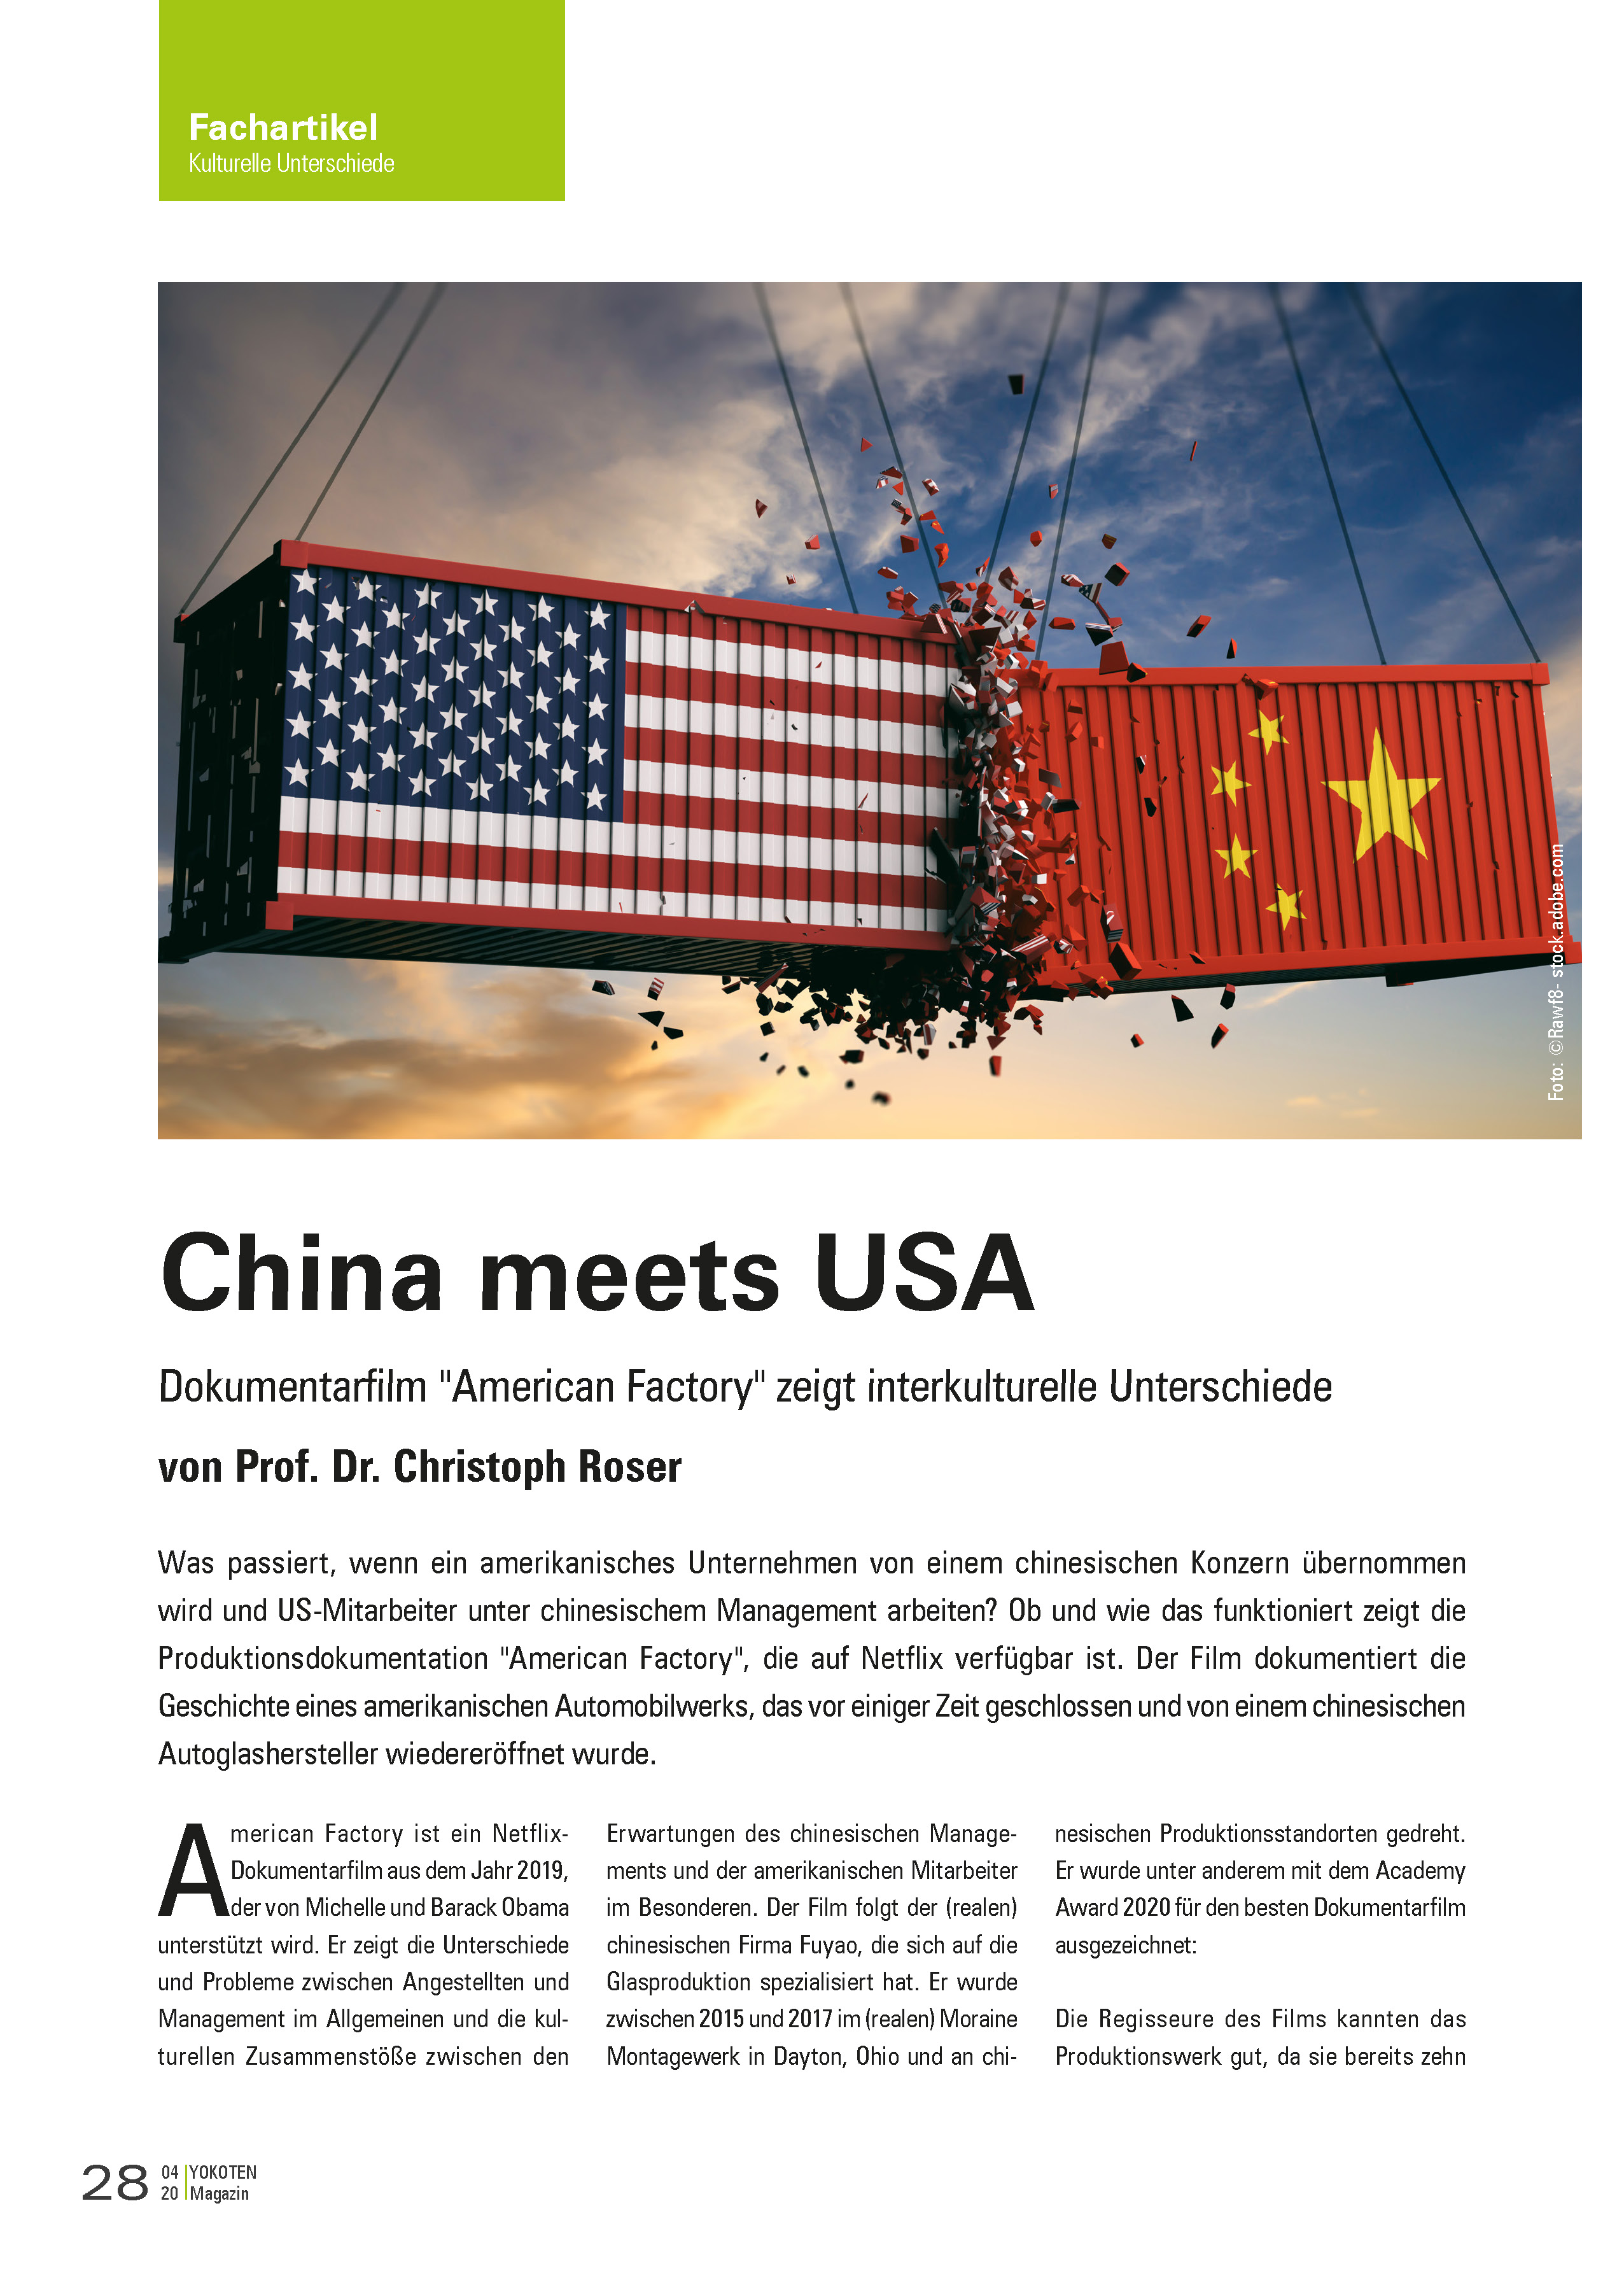 YOKOTEN-Artikel: China meets USA